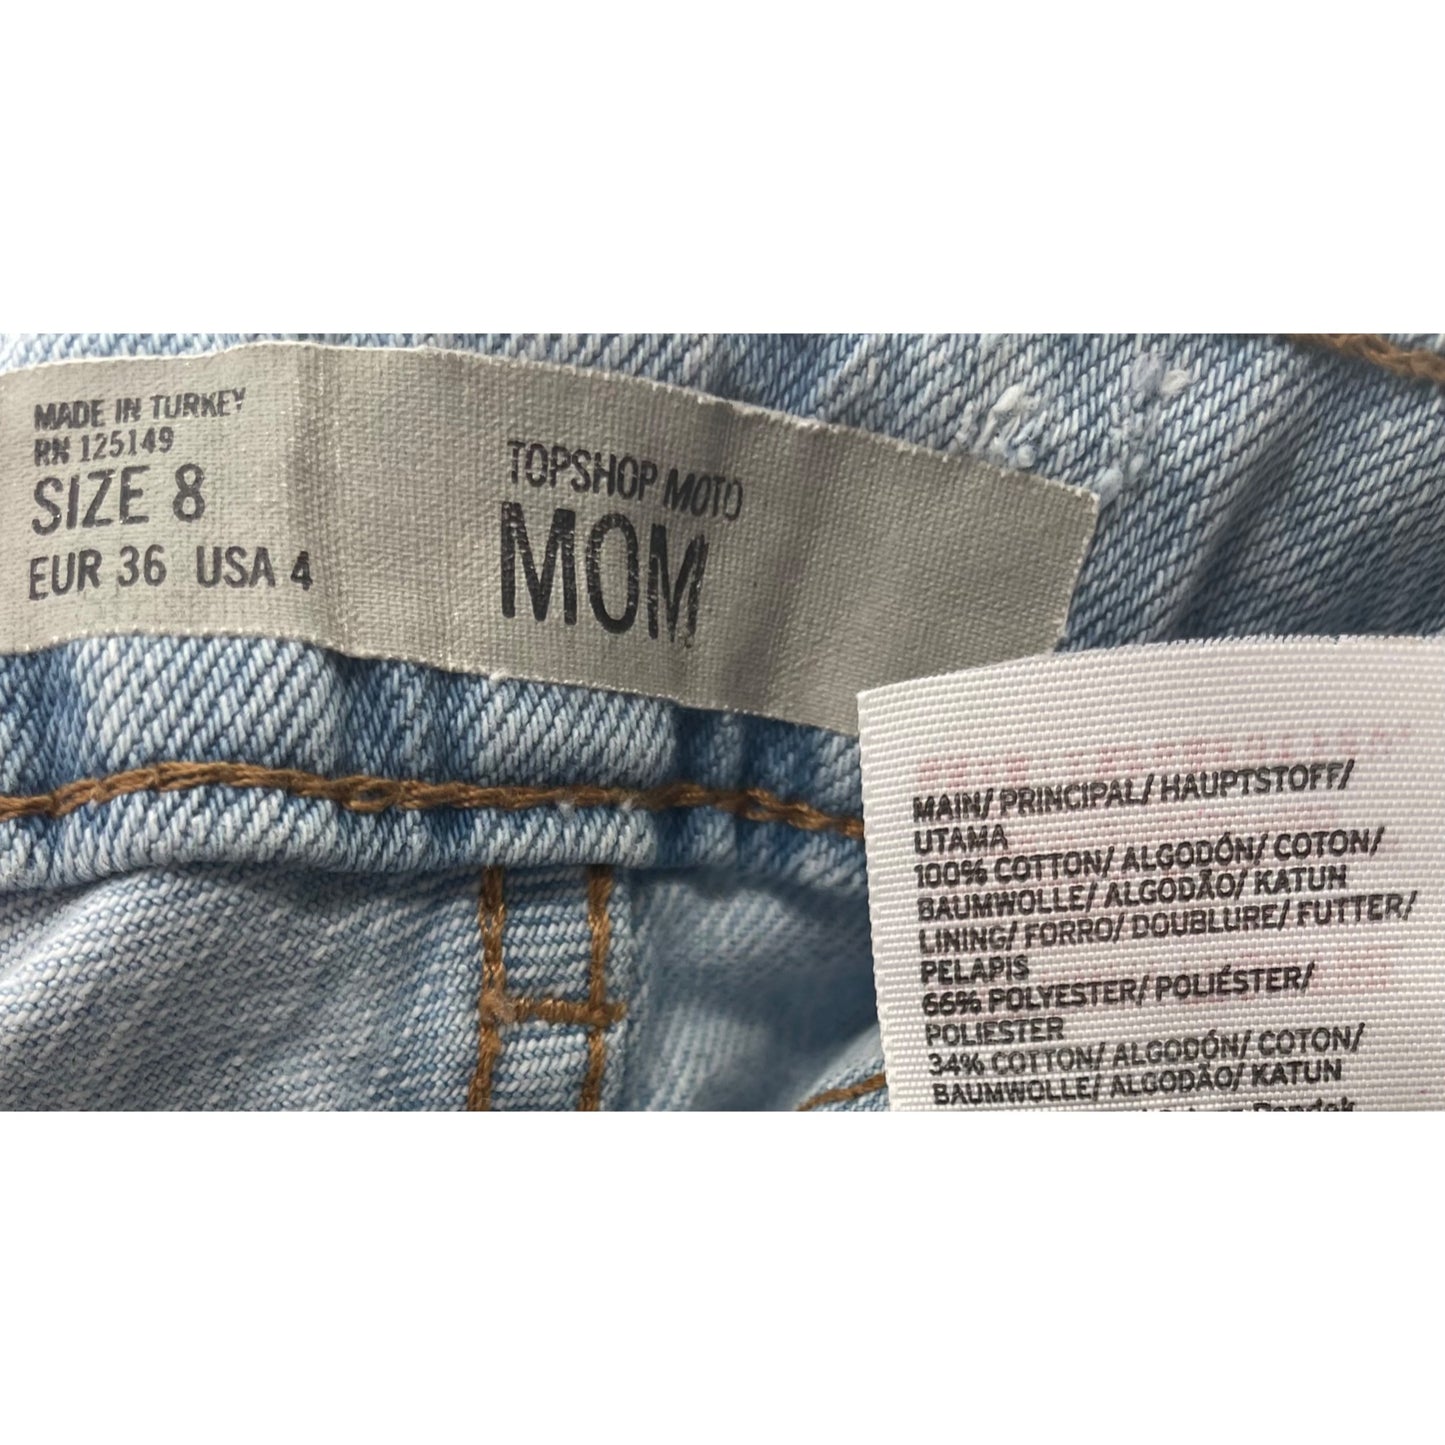 Topshop Moto MOM Women's Size 8 Light Blue Denim Shorts W/ Fringe Hem